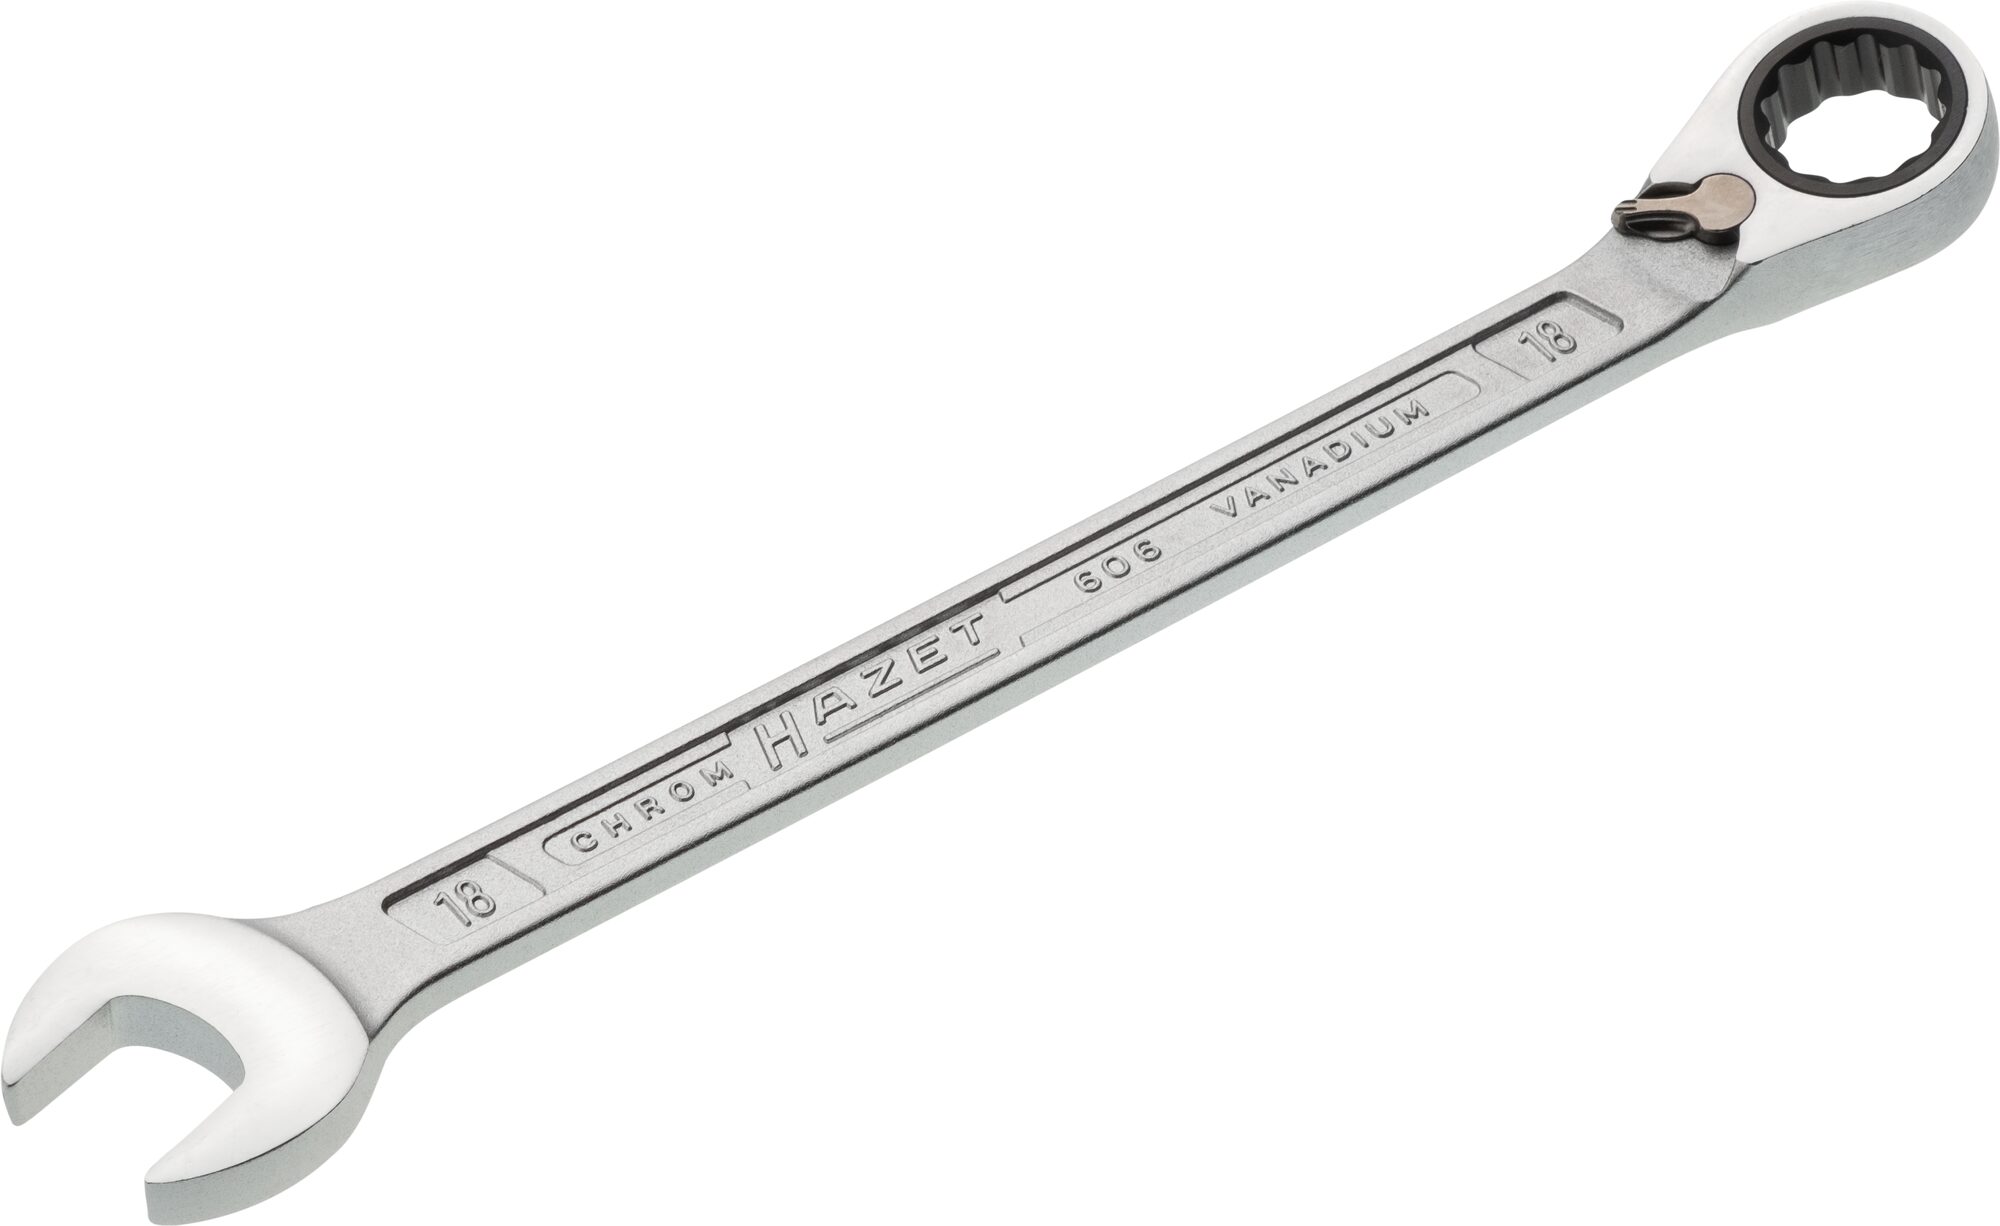 HAZET Knarren Ring-Maulschlüssel 606-18 · Außen Doppel-Sechskant-Tractionsprofil · 18 mm